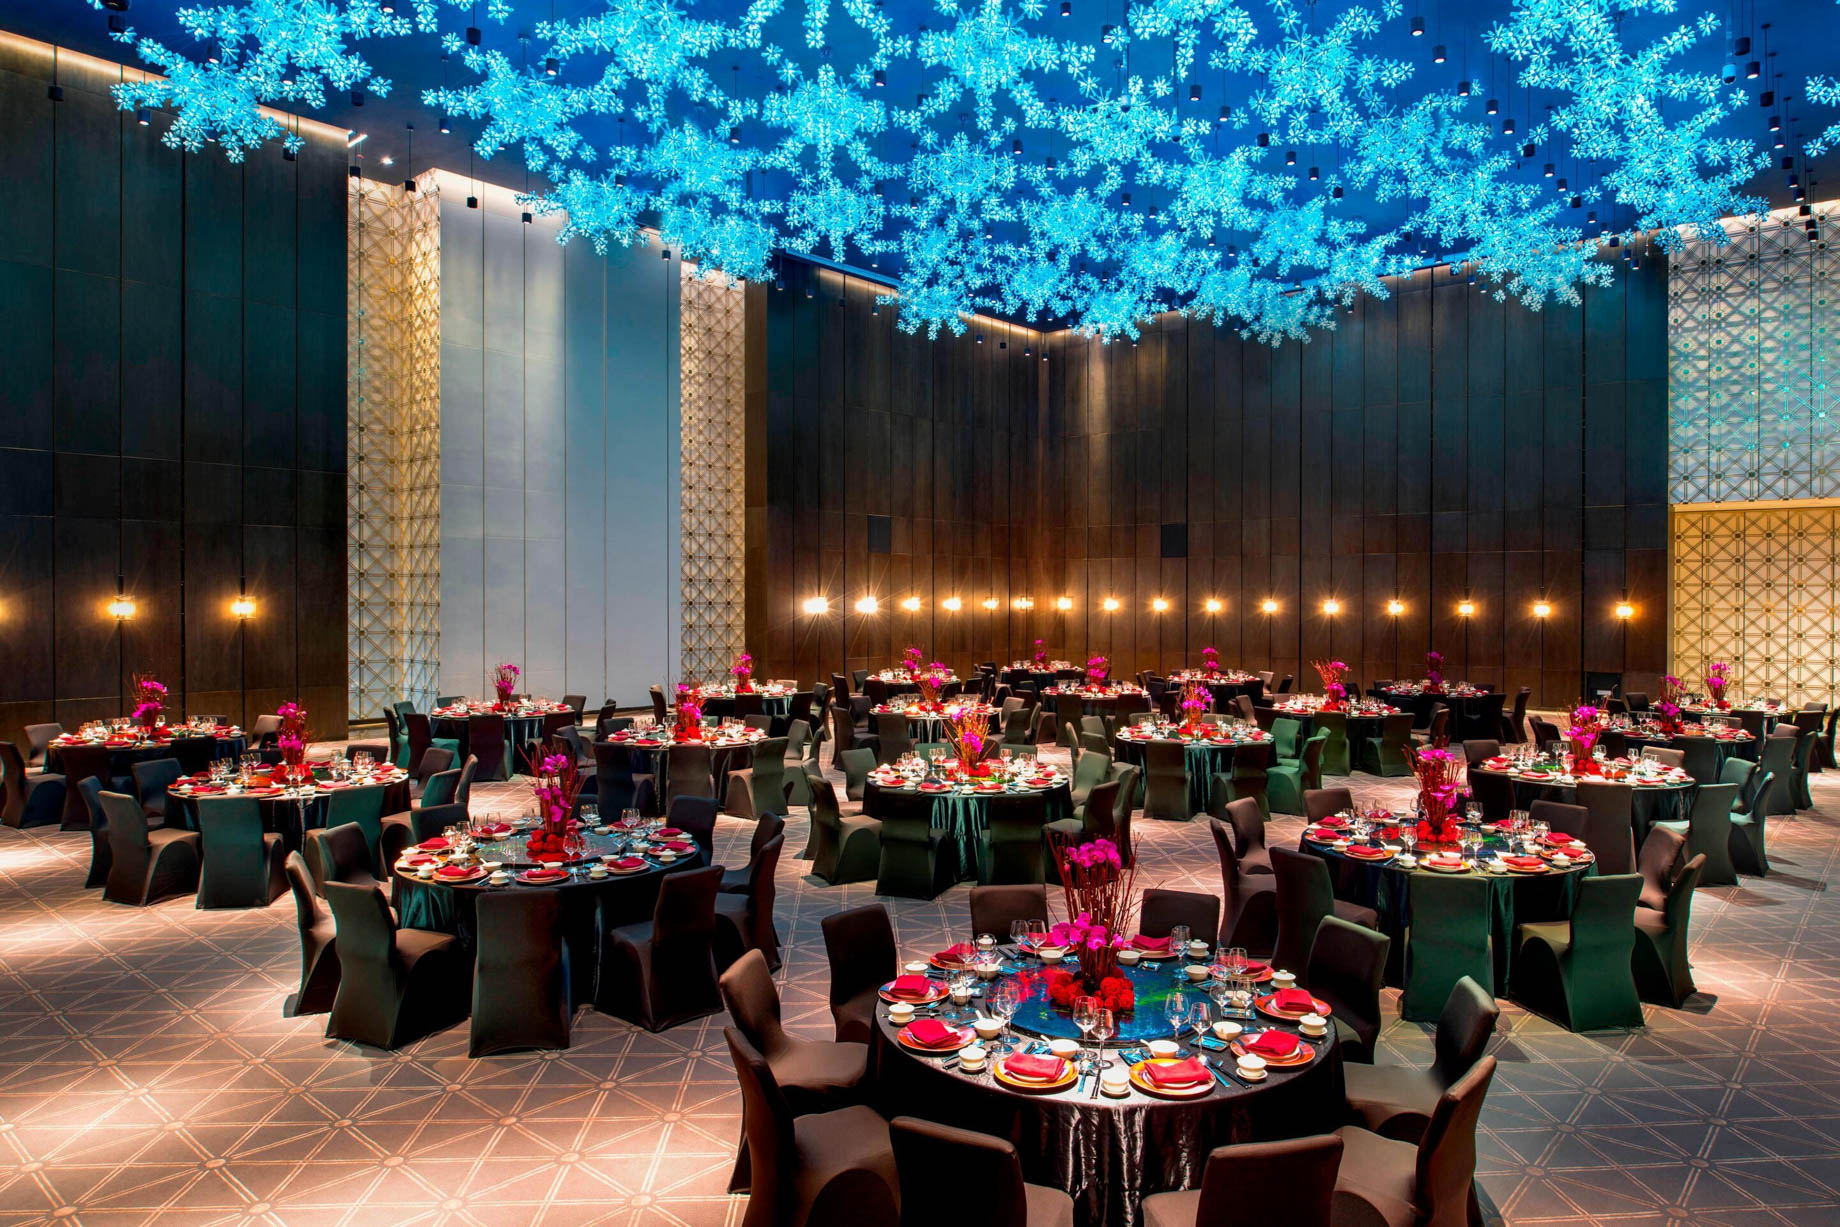 W Guangzhou Hotel – Tianhe District, Guangzhou, China – Great Room Round Tables